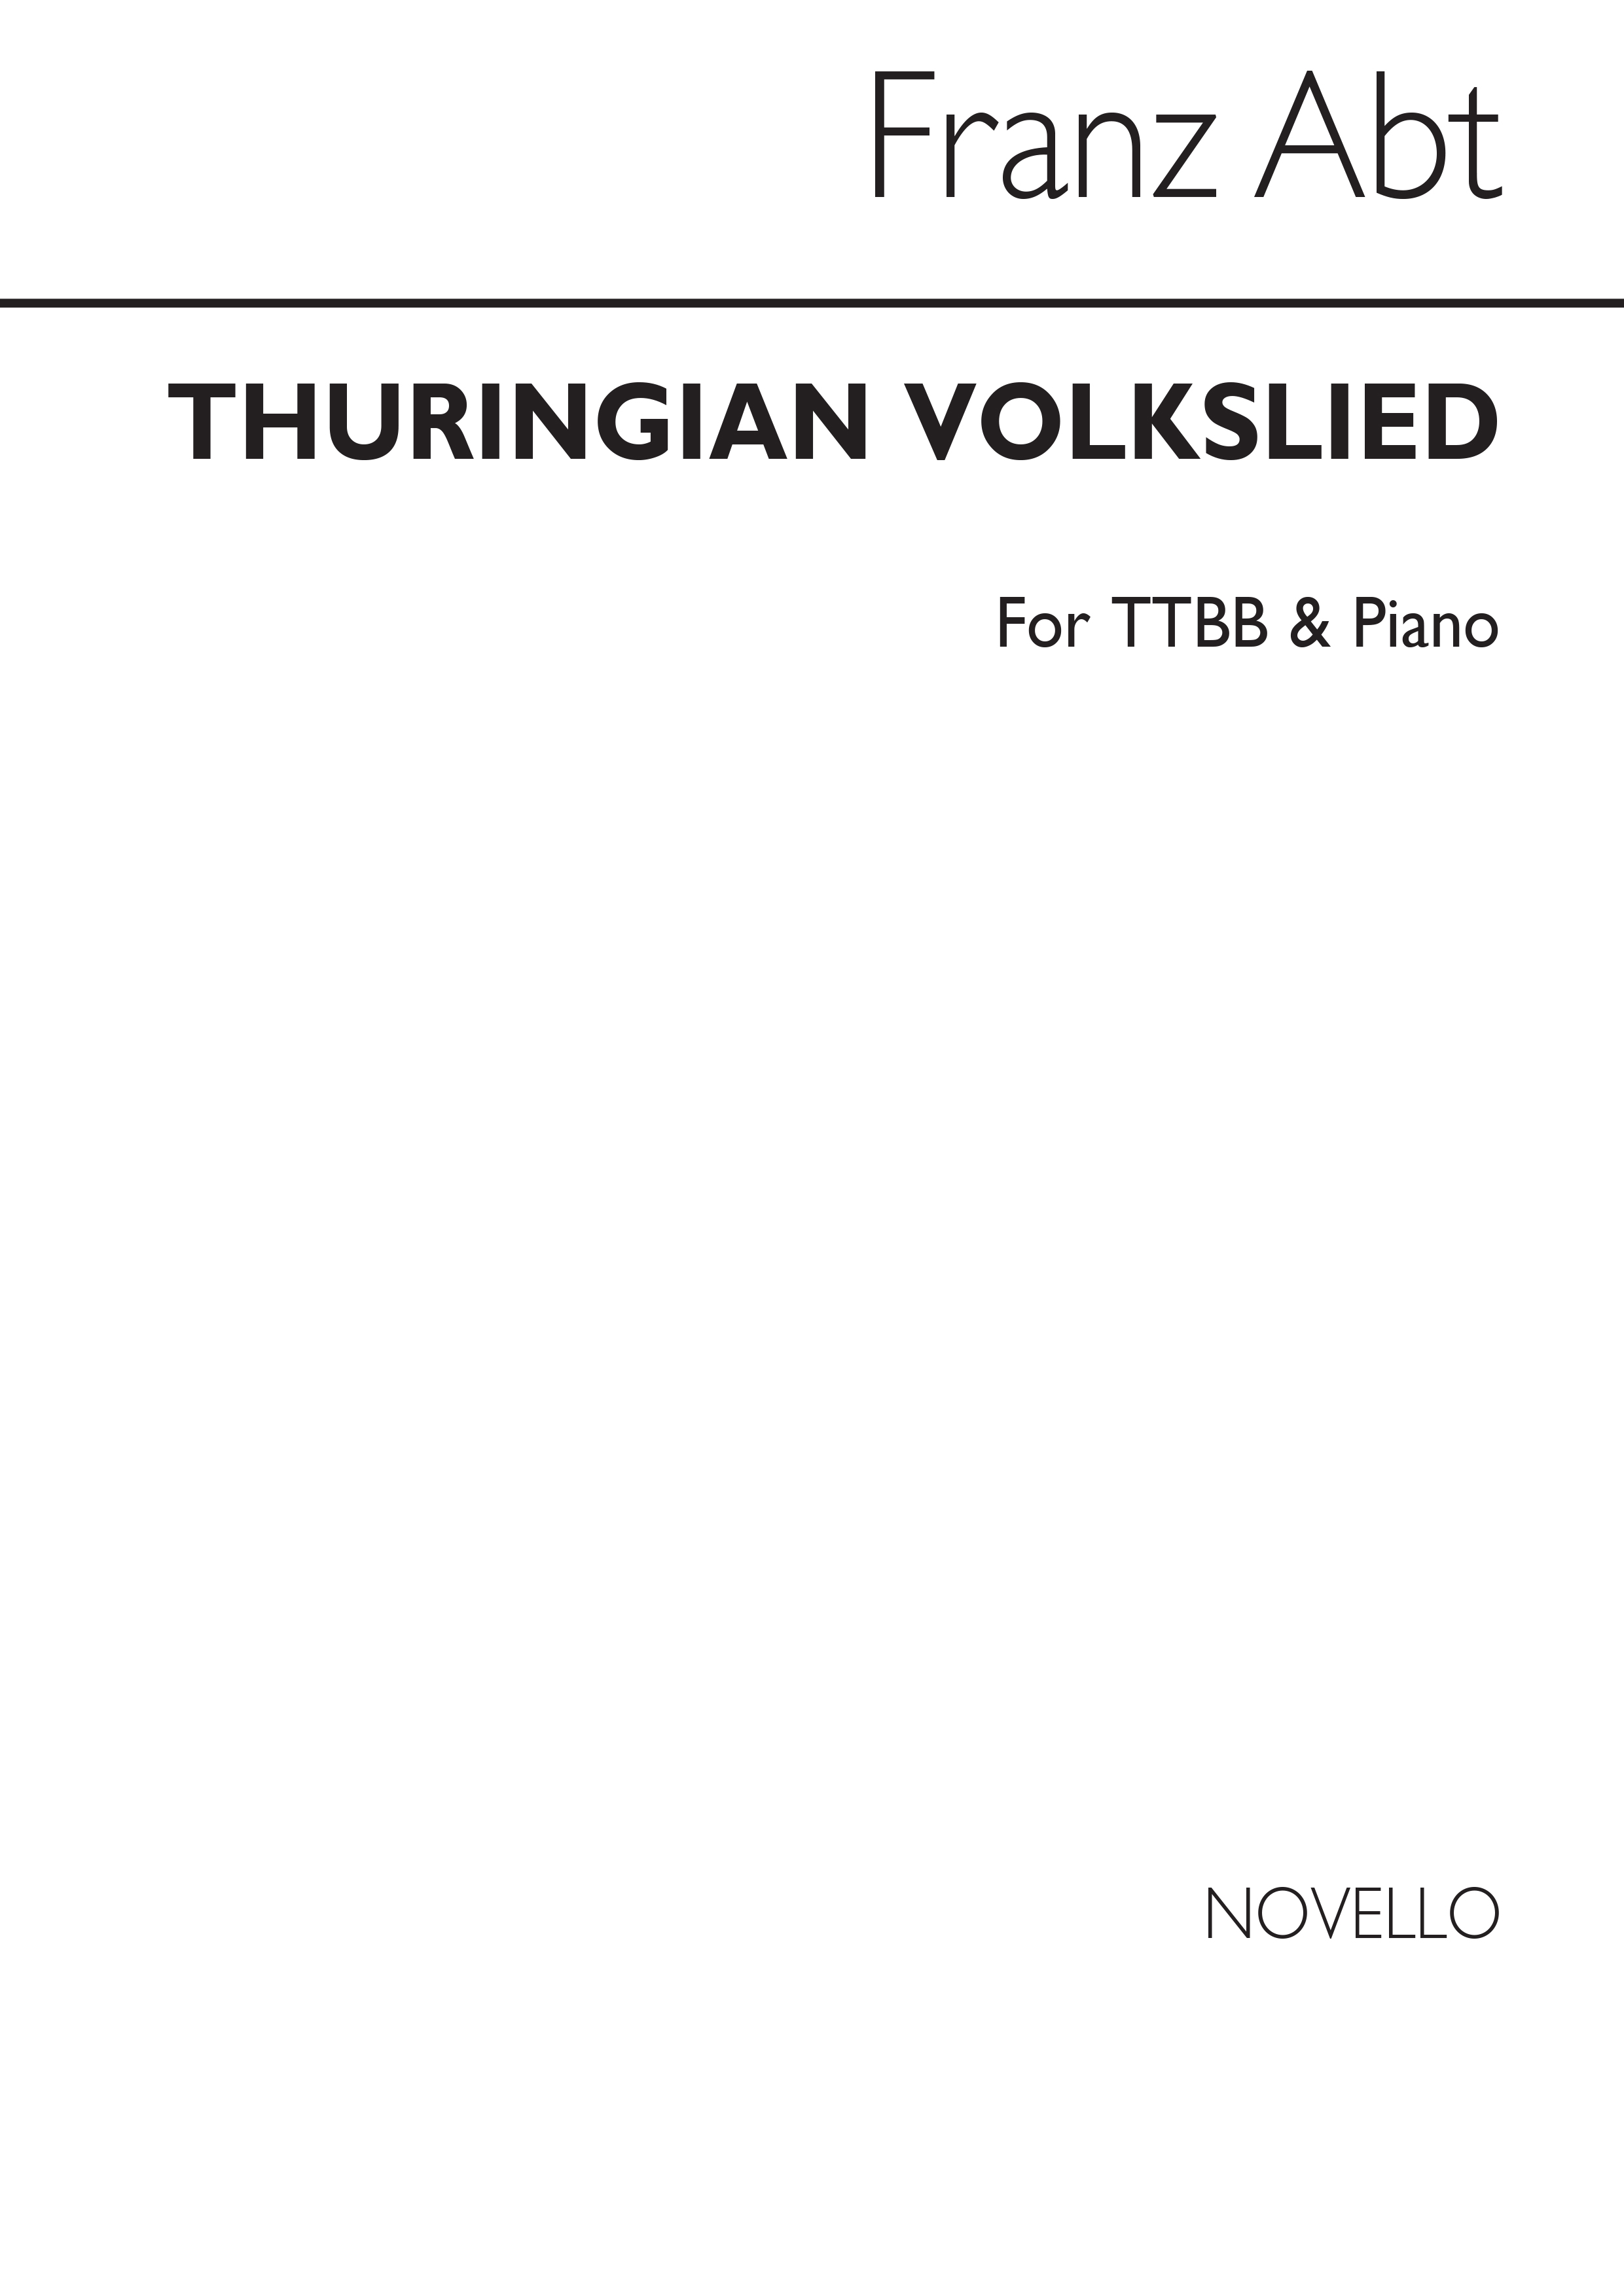 Thuringian Volkslied (arr. Abt)